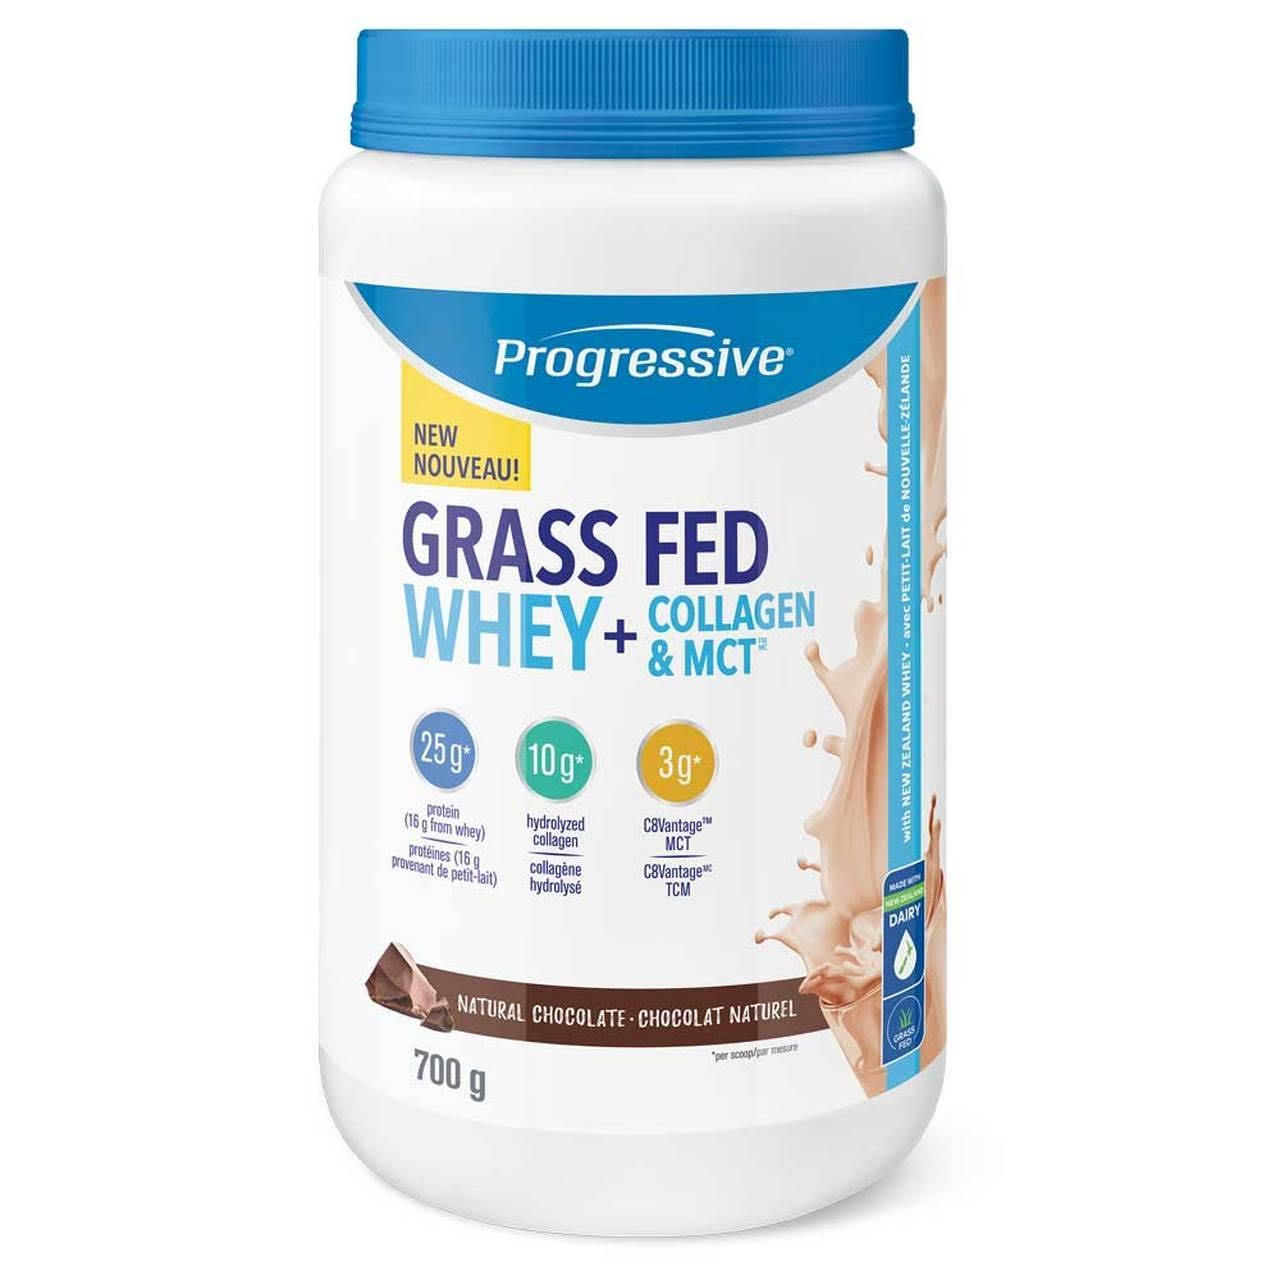 Progressive Grass Fed Whey + Collagen & MCT, Chocolate - 700g